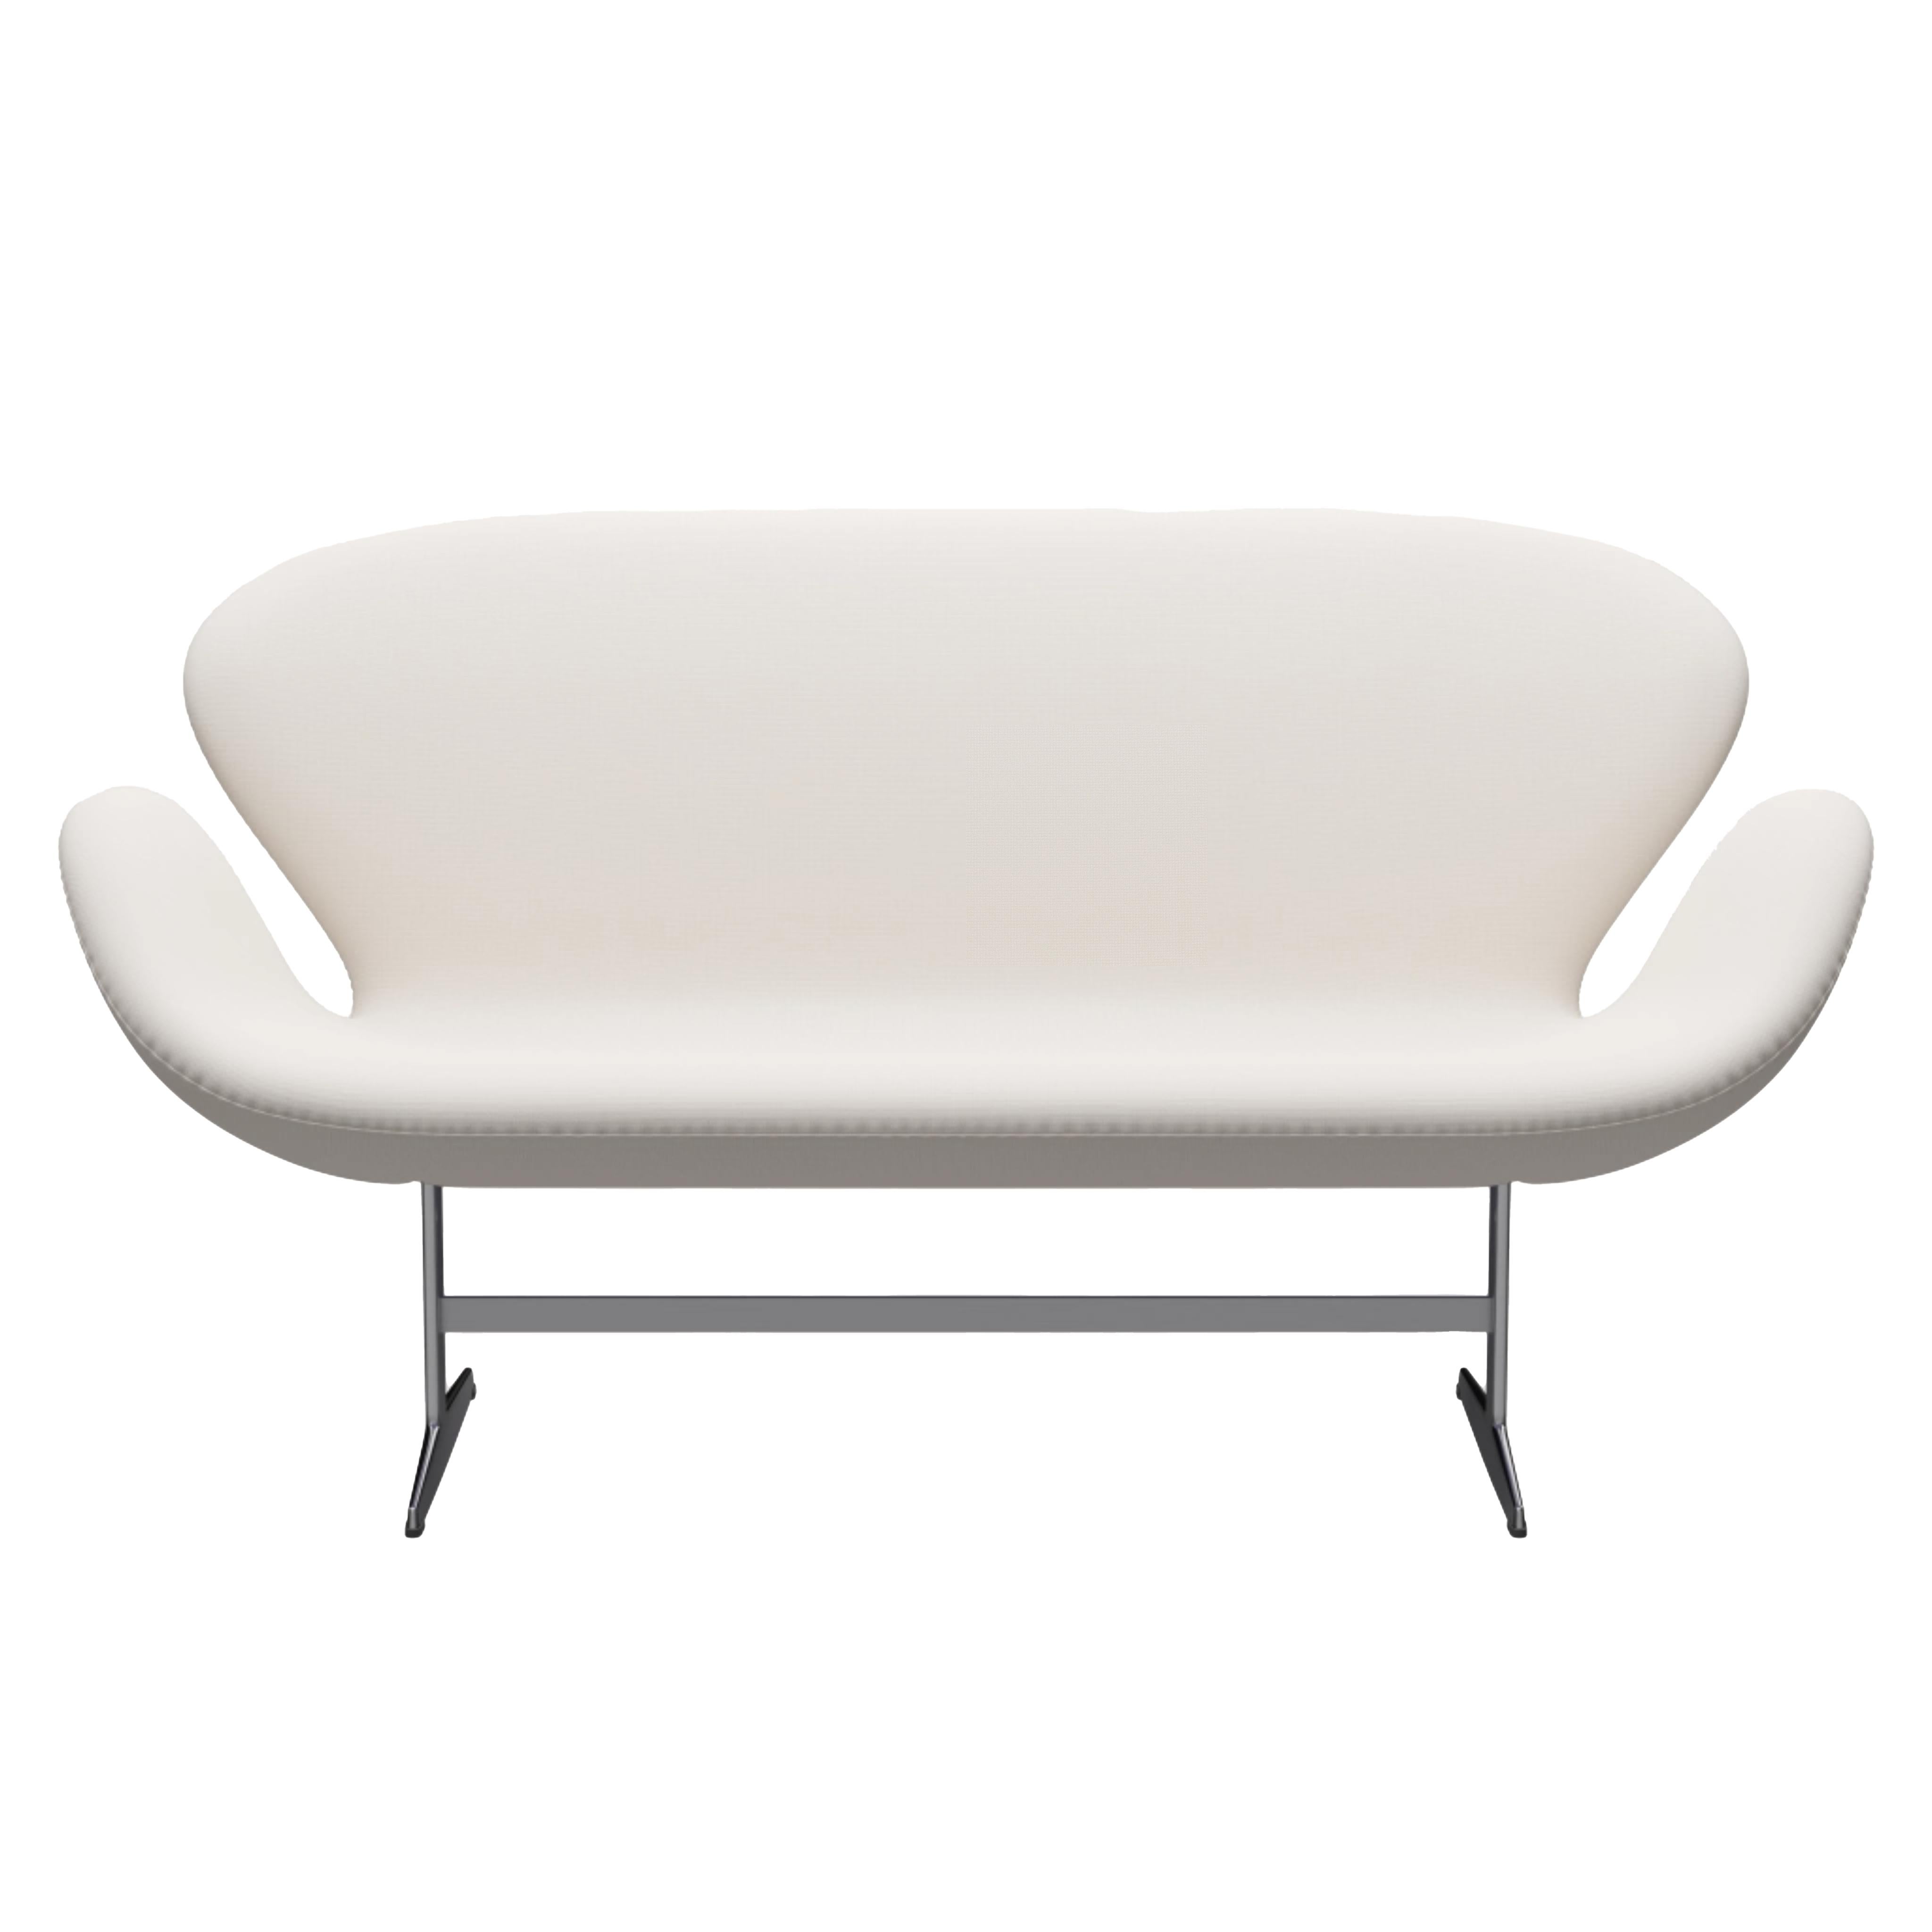 Contemporary Arne Jacobsen 'Swan' Sofa for Fritz Hansen in Fabric Upholstery (Cat. 1) For Sale